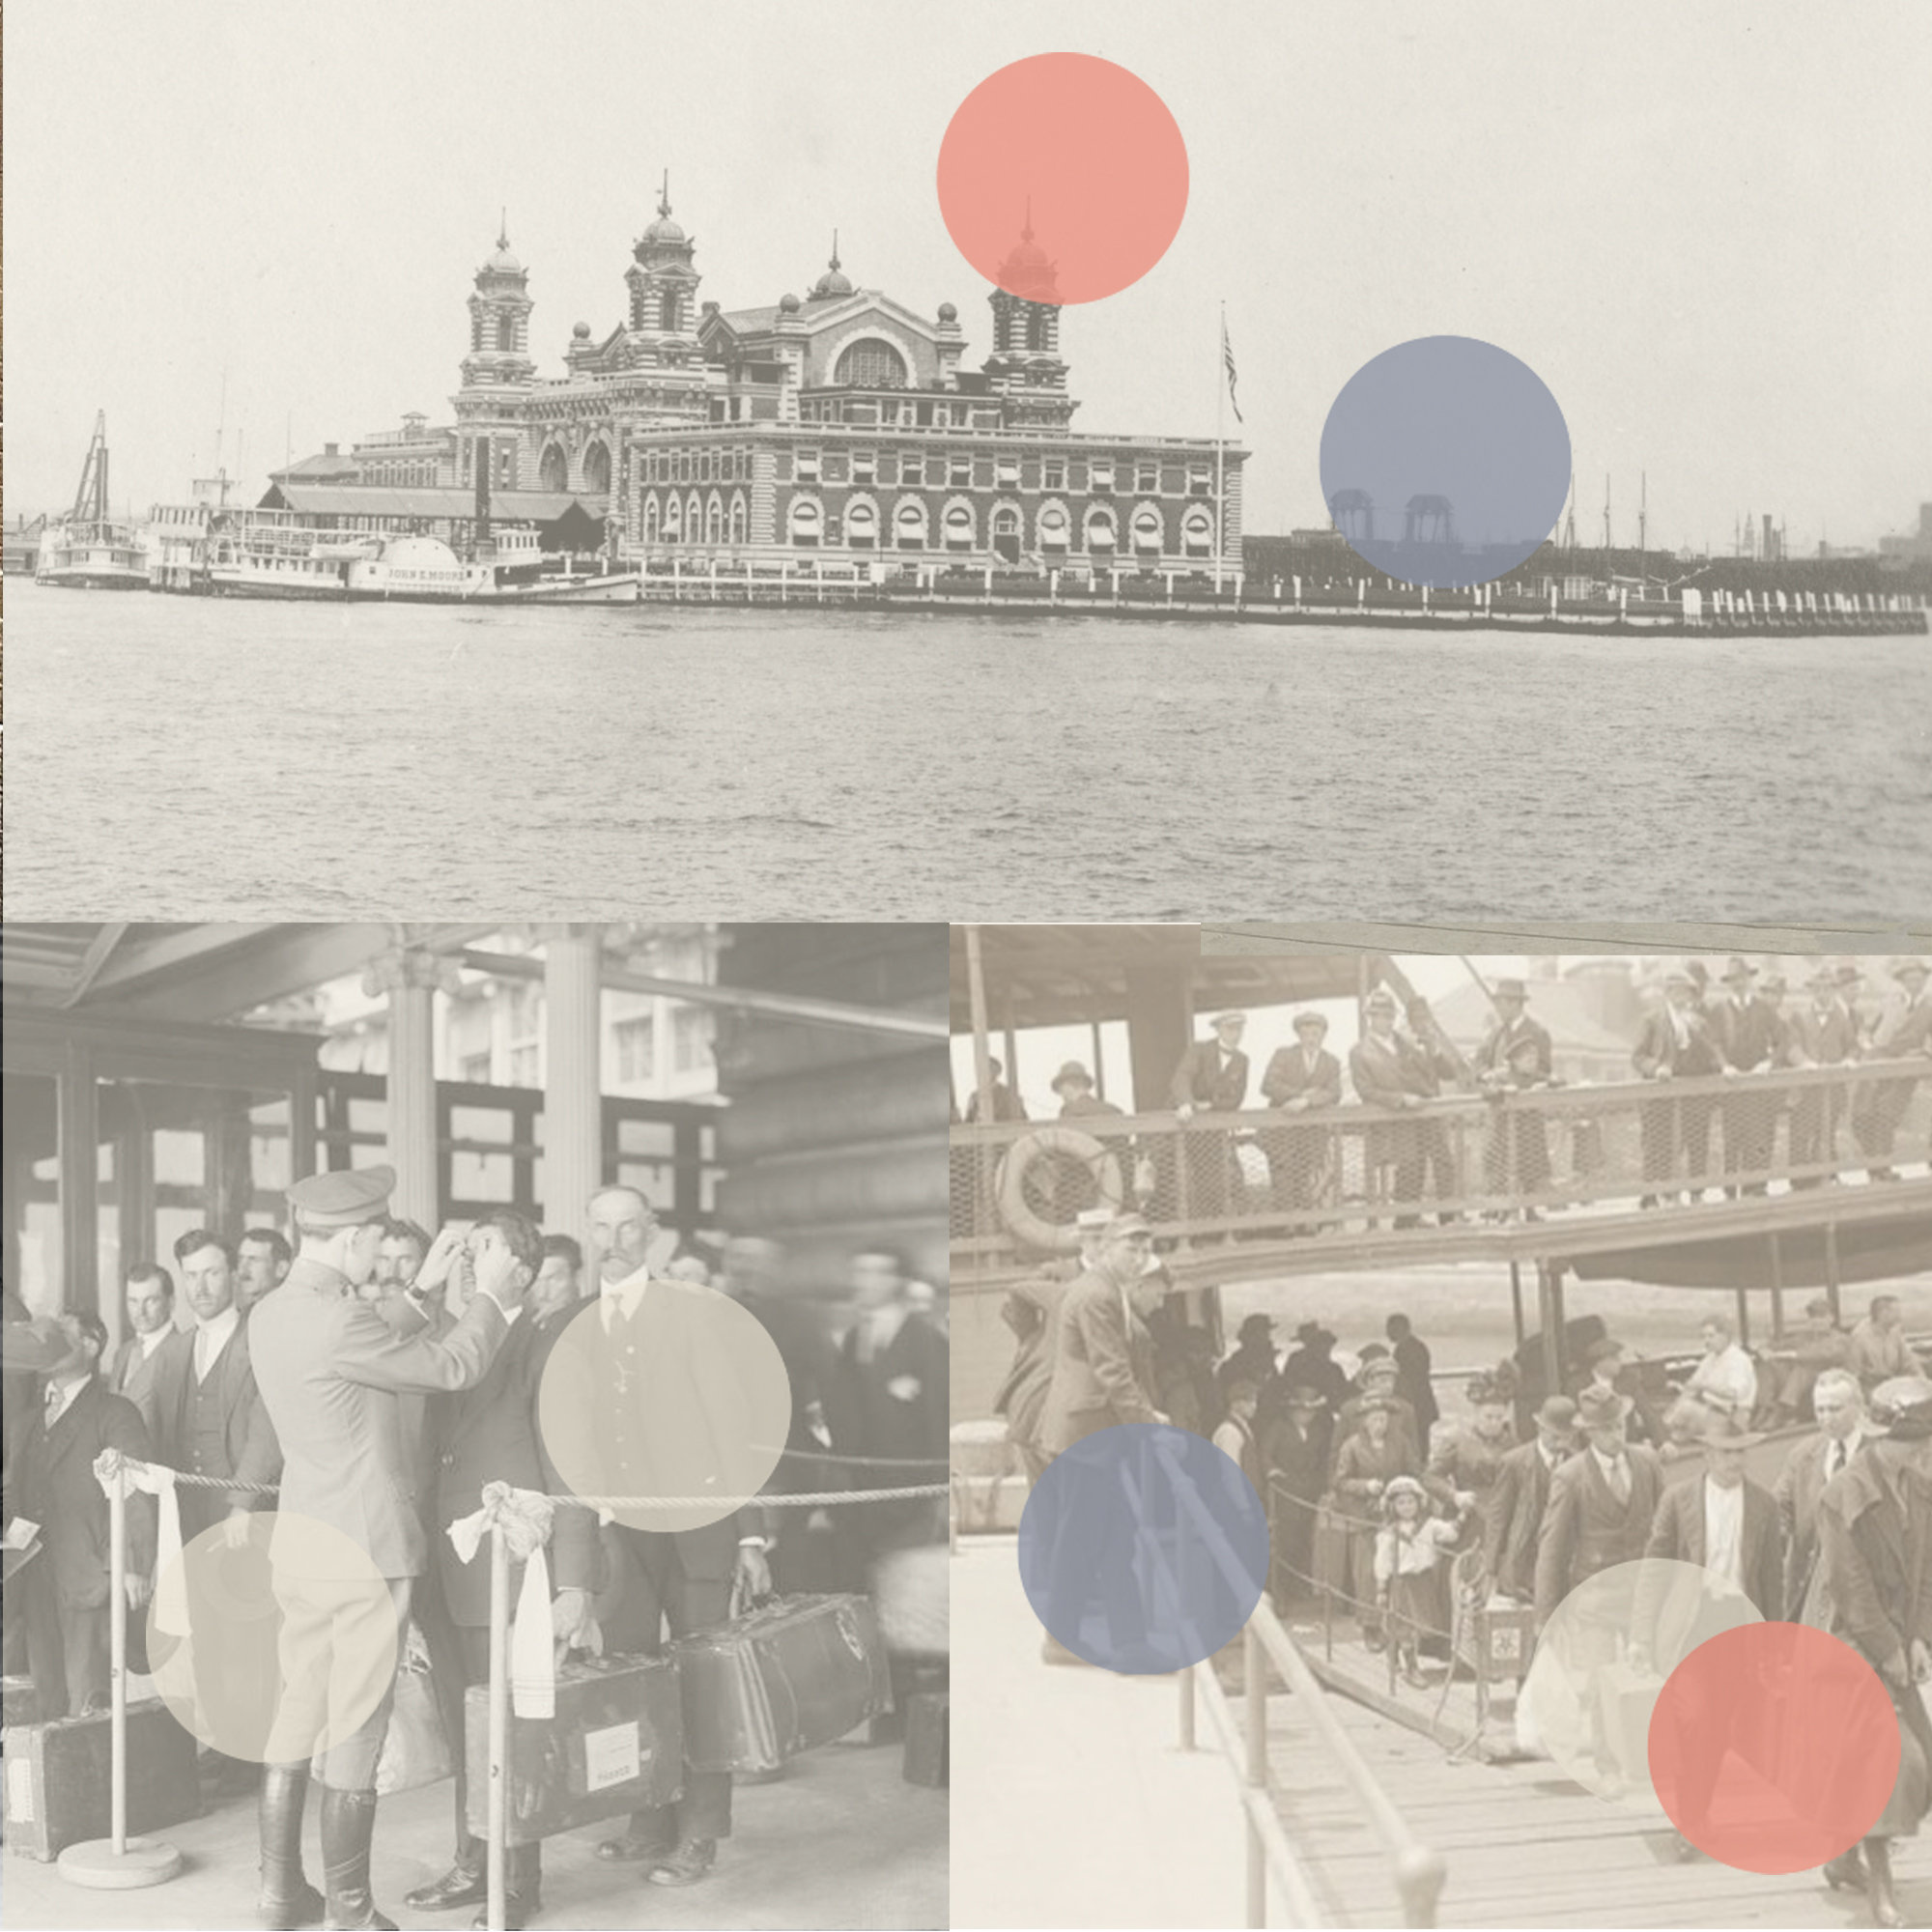 The Ellis Island Immigration Experience